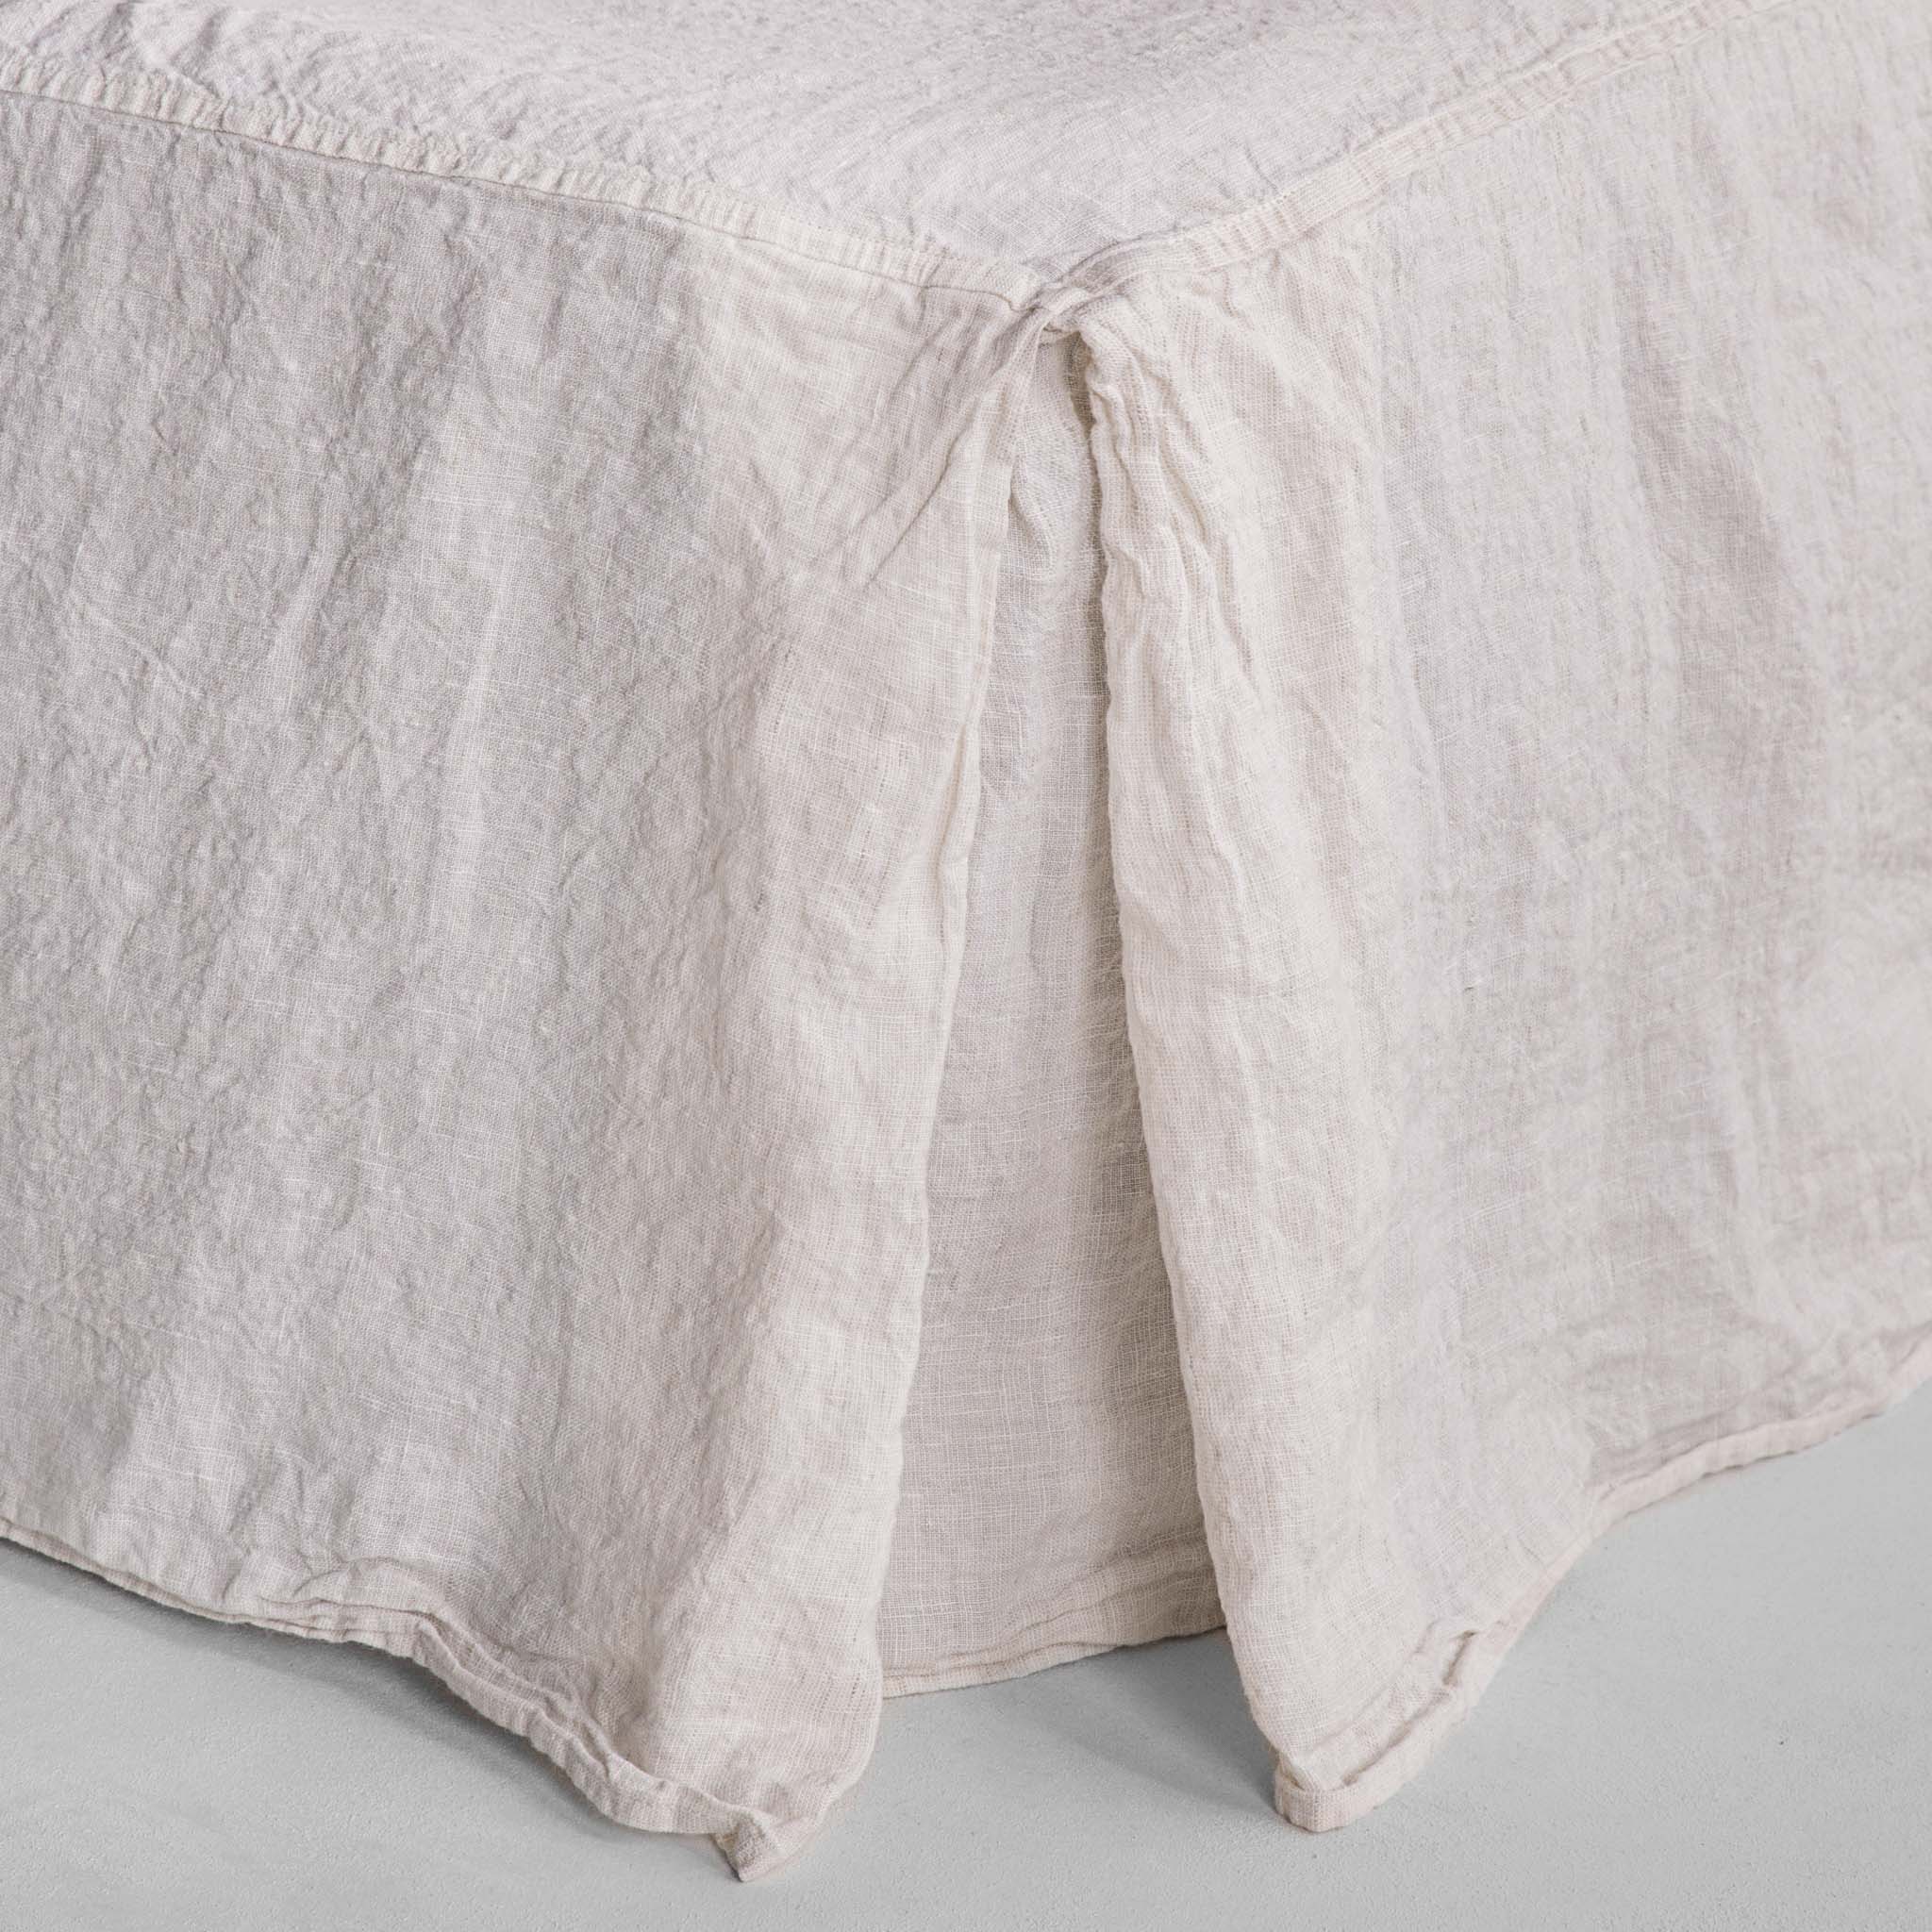 Linen Valance/Bed Skirt | Pale Stone | Hale Mercantile Co.